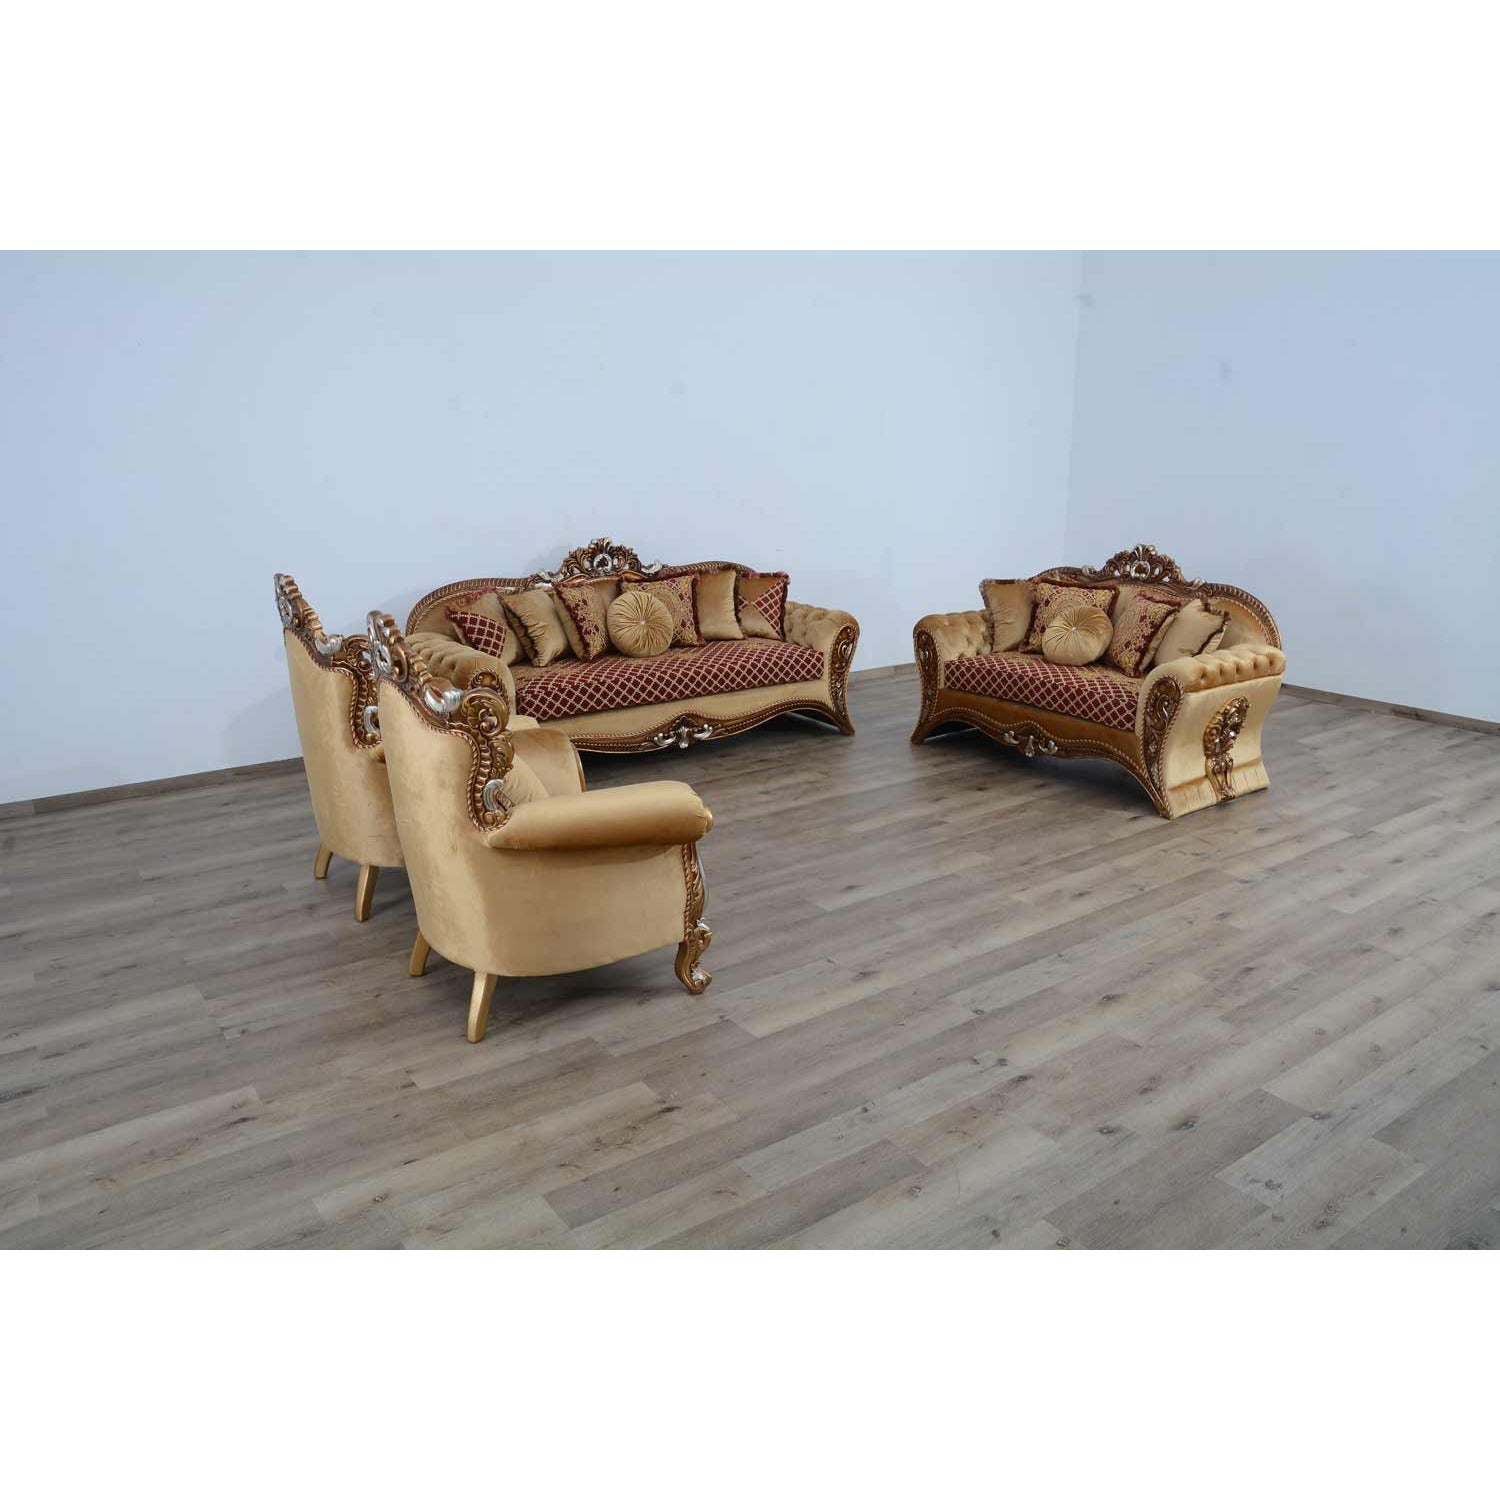 European Furniture - Emperador III 4 Piece Living Room Set in Red Gold - 42036-4SET - New Star Living